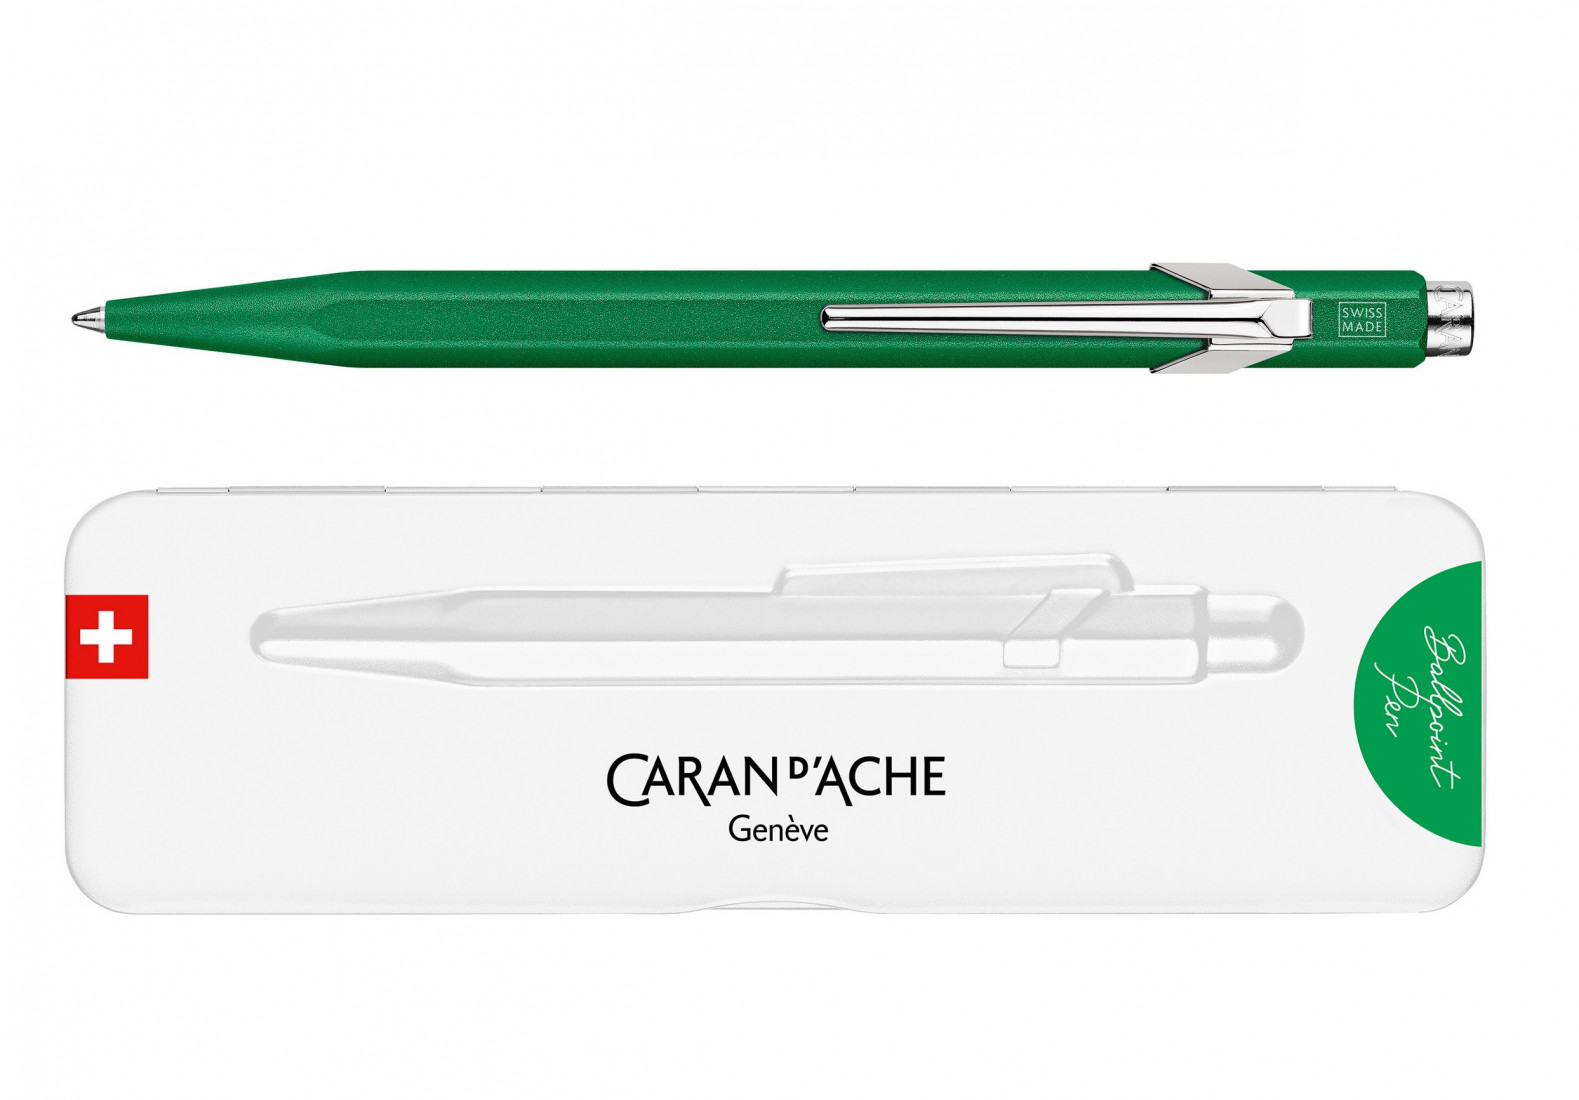 Caran Dache 849 metallic green ballpoint pen, with slim metal box